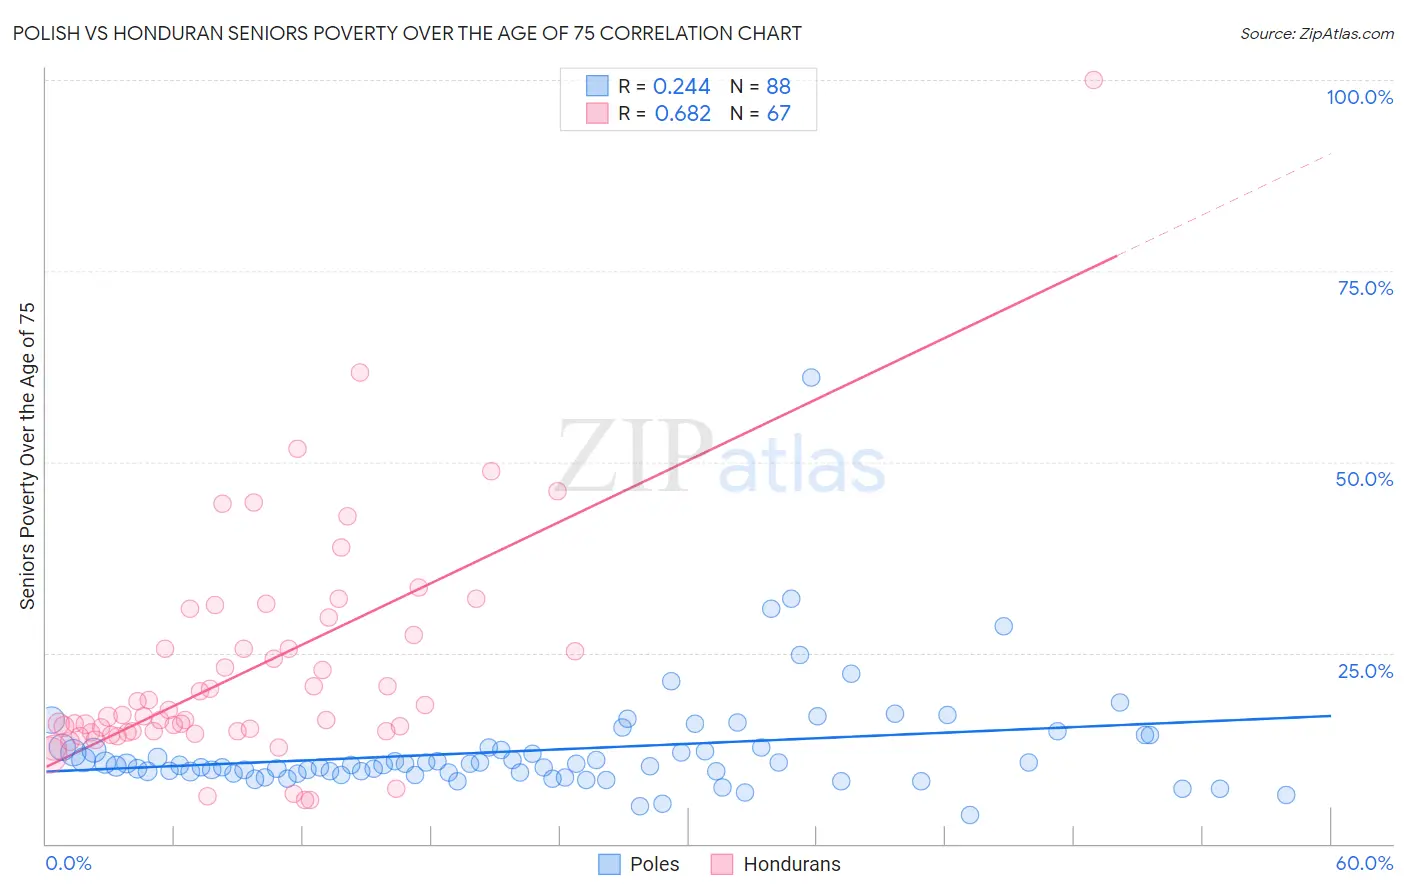 Polish vs Honduran Seniors Poverty Over the Age of 75